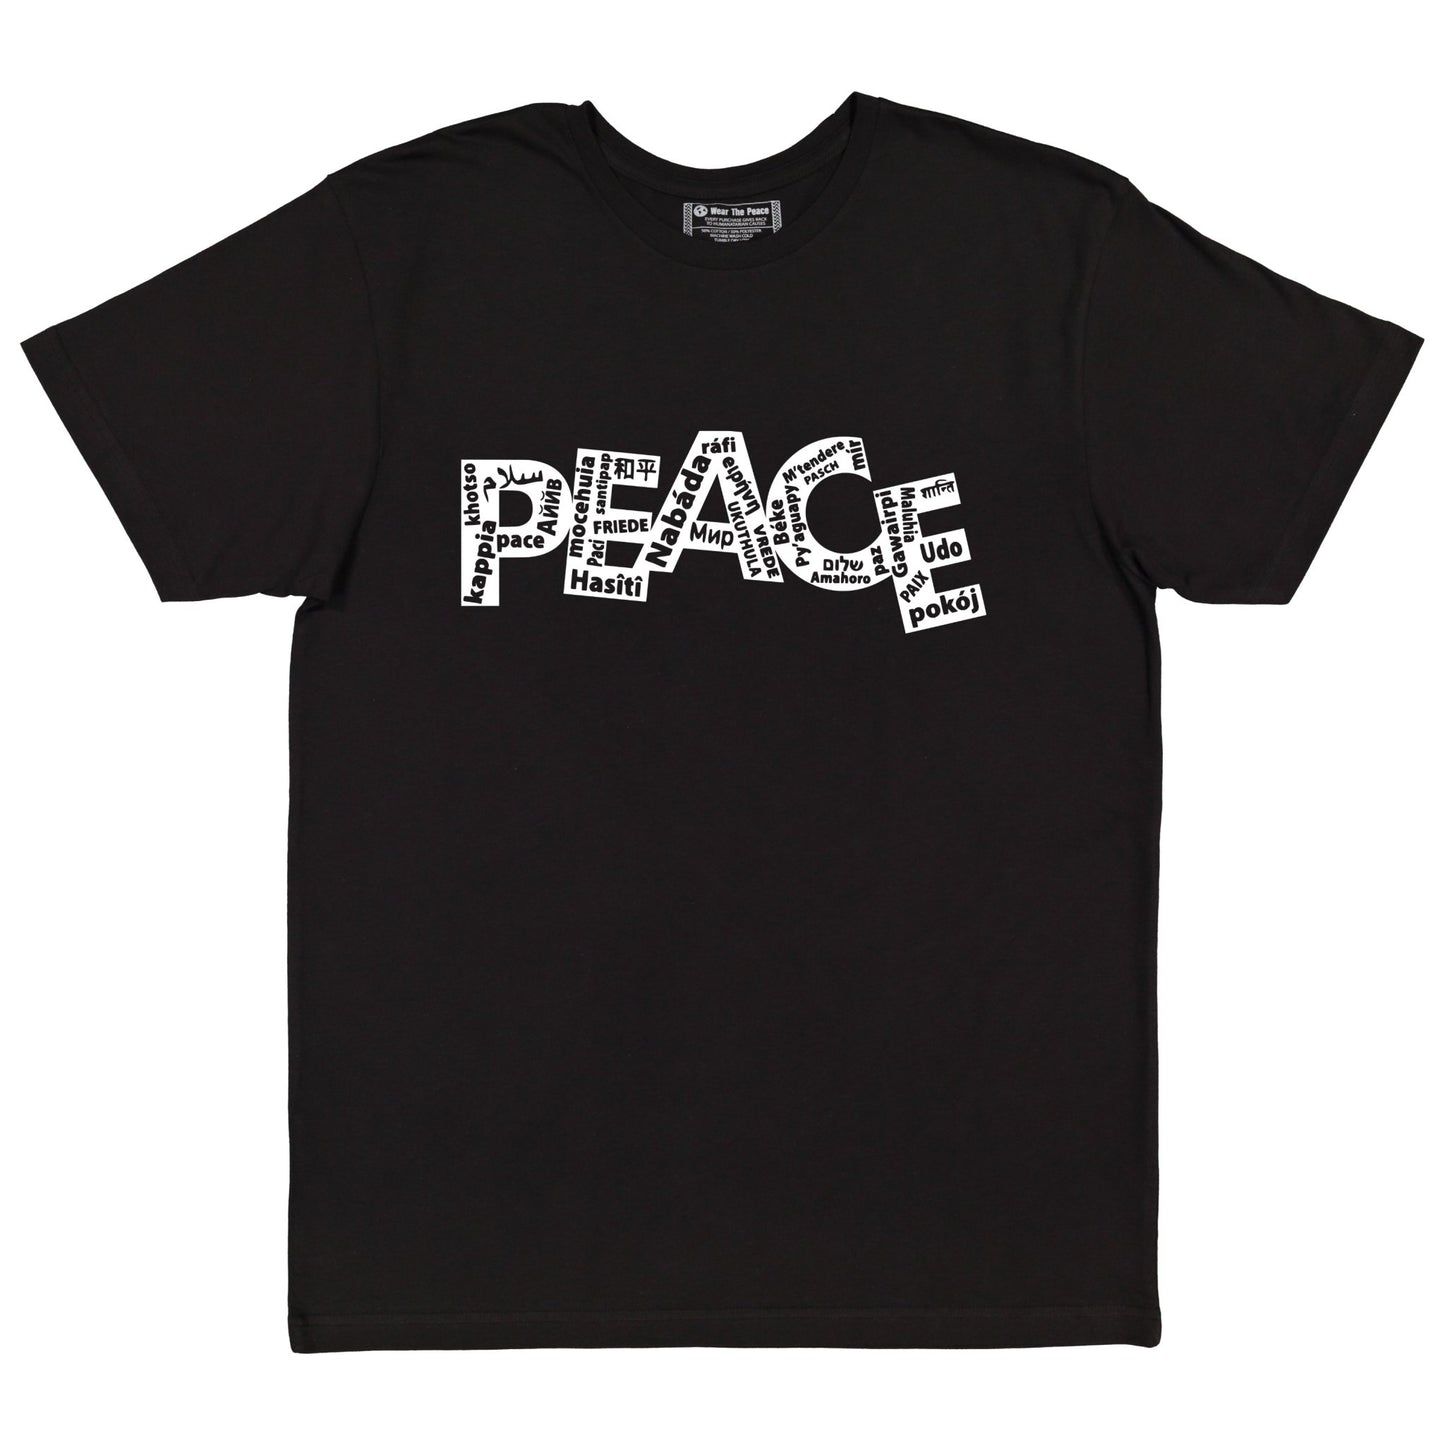 World Language Peace Tee Wear The Peace Short Sleeves Black S